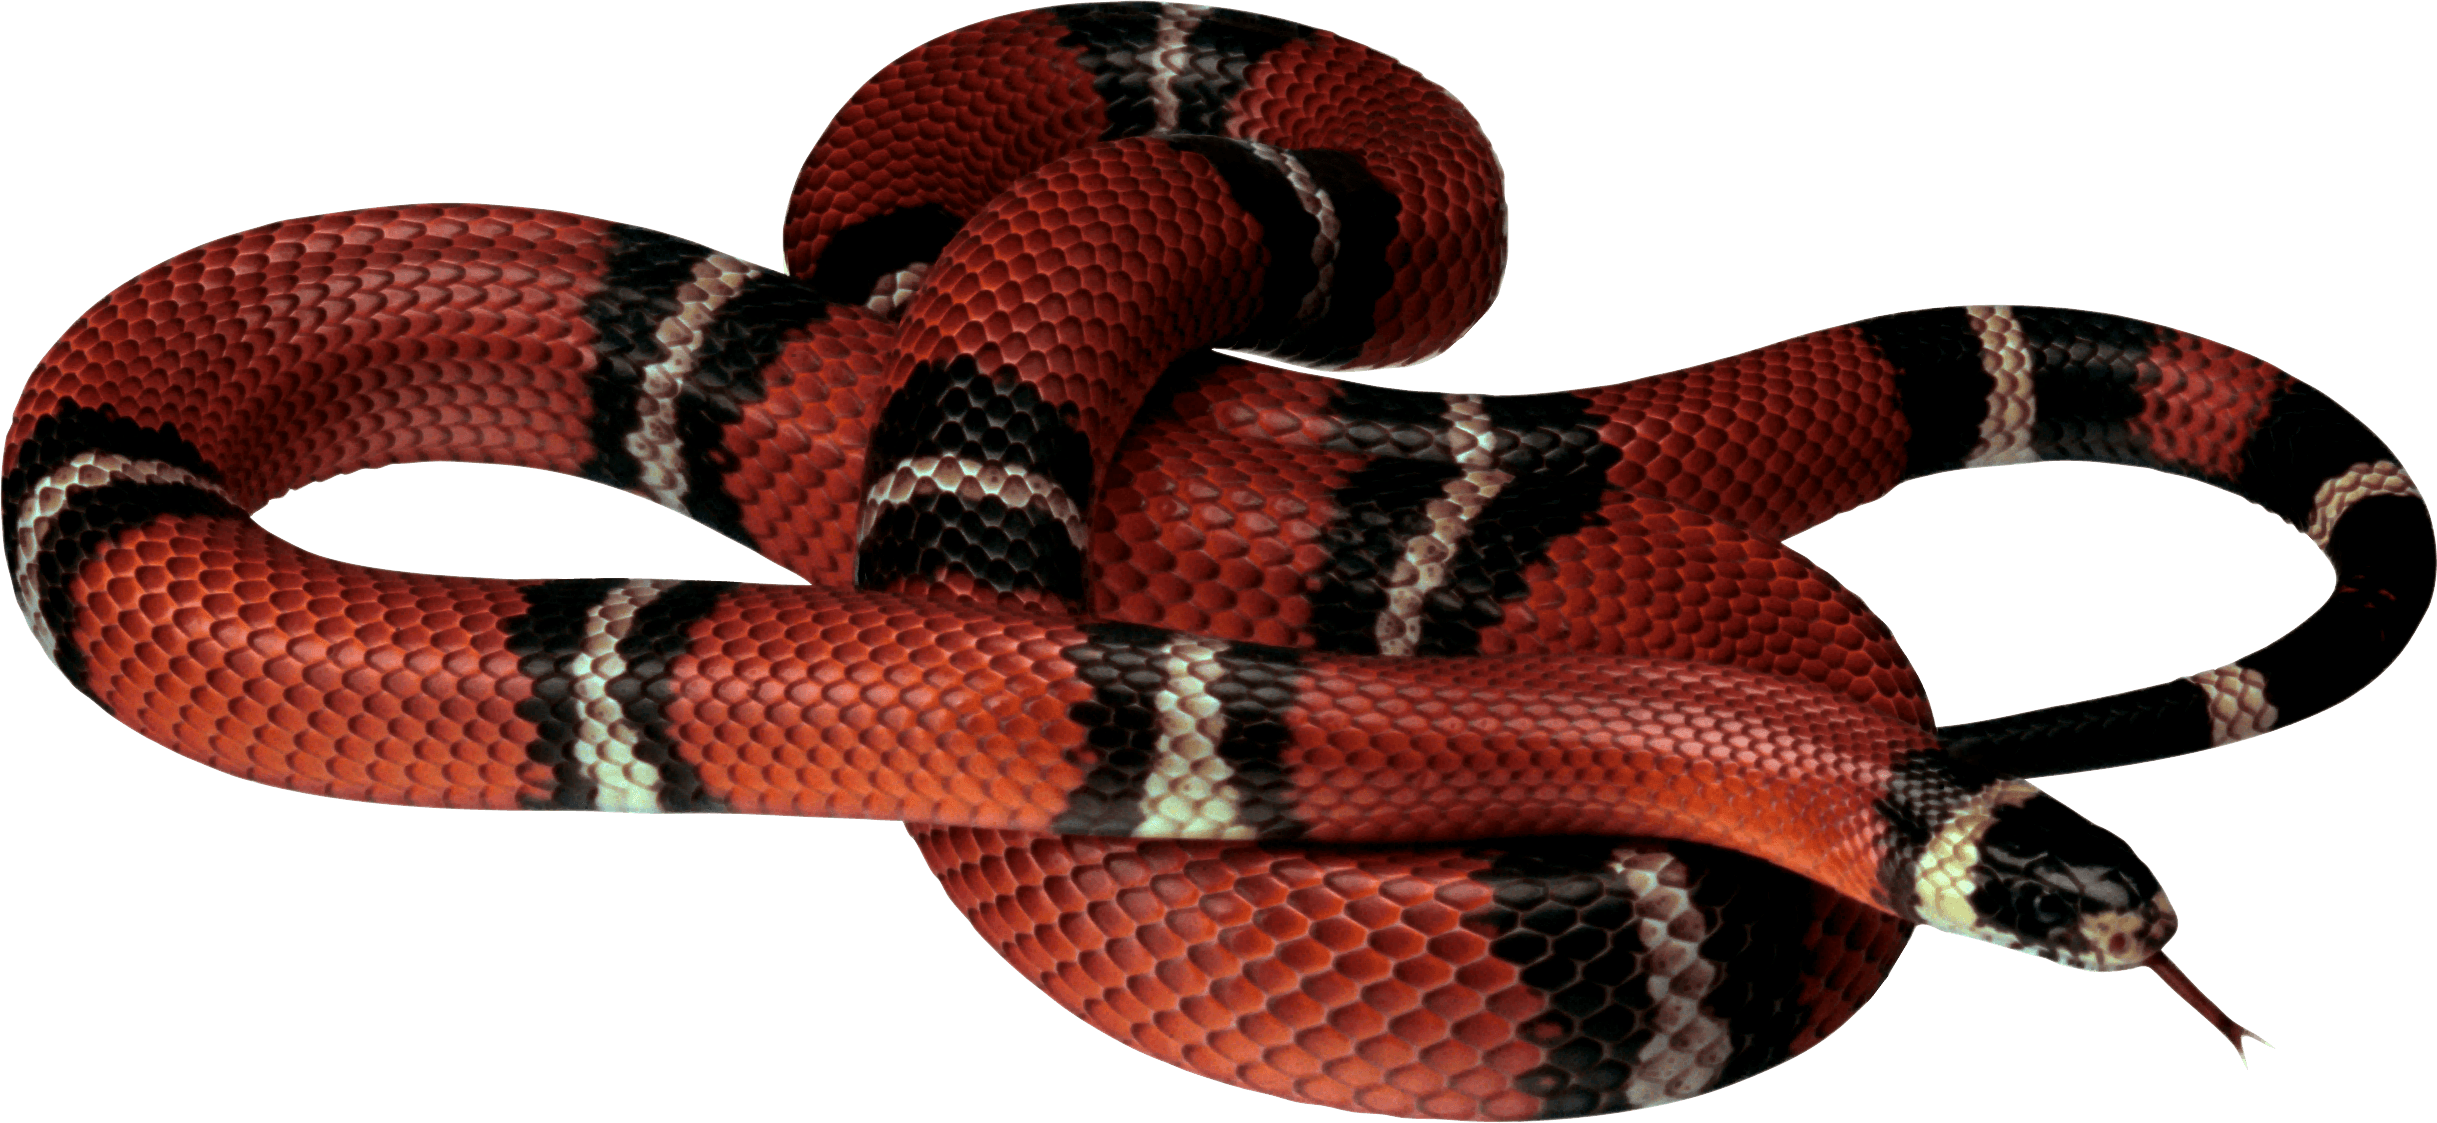 Red white black Snake PNG Image - PurePNG | Free transparent CC0 PNG ...